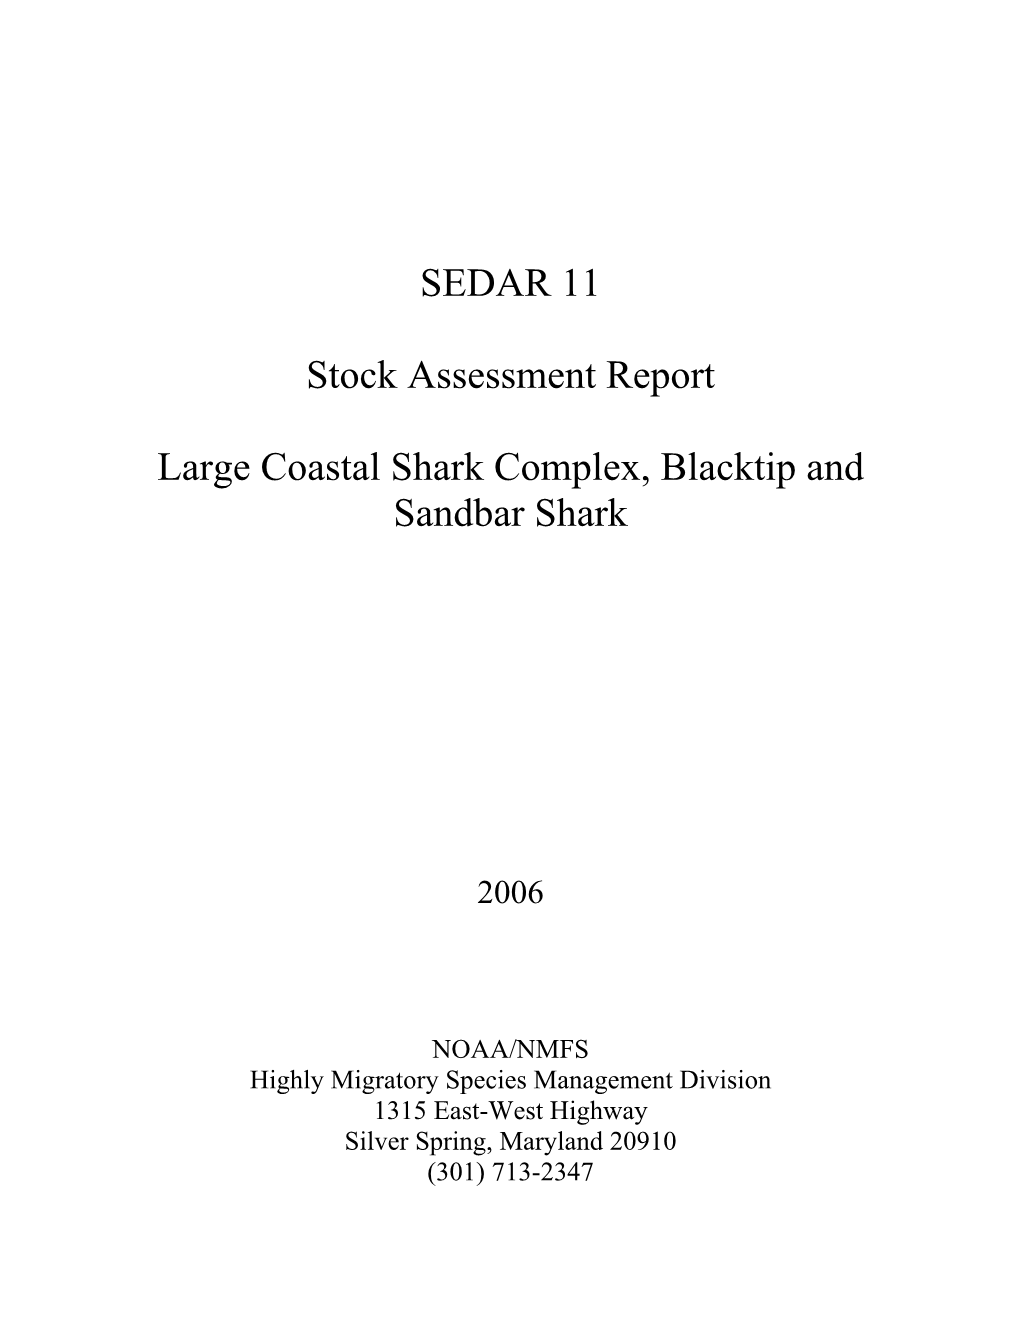 SEDAR 11 Stock Assessment Report Large Coastal Shark Complex